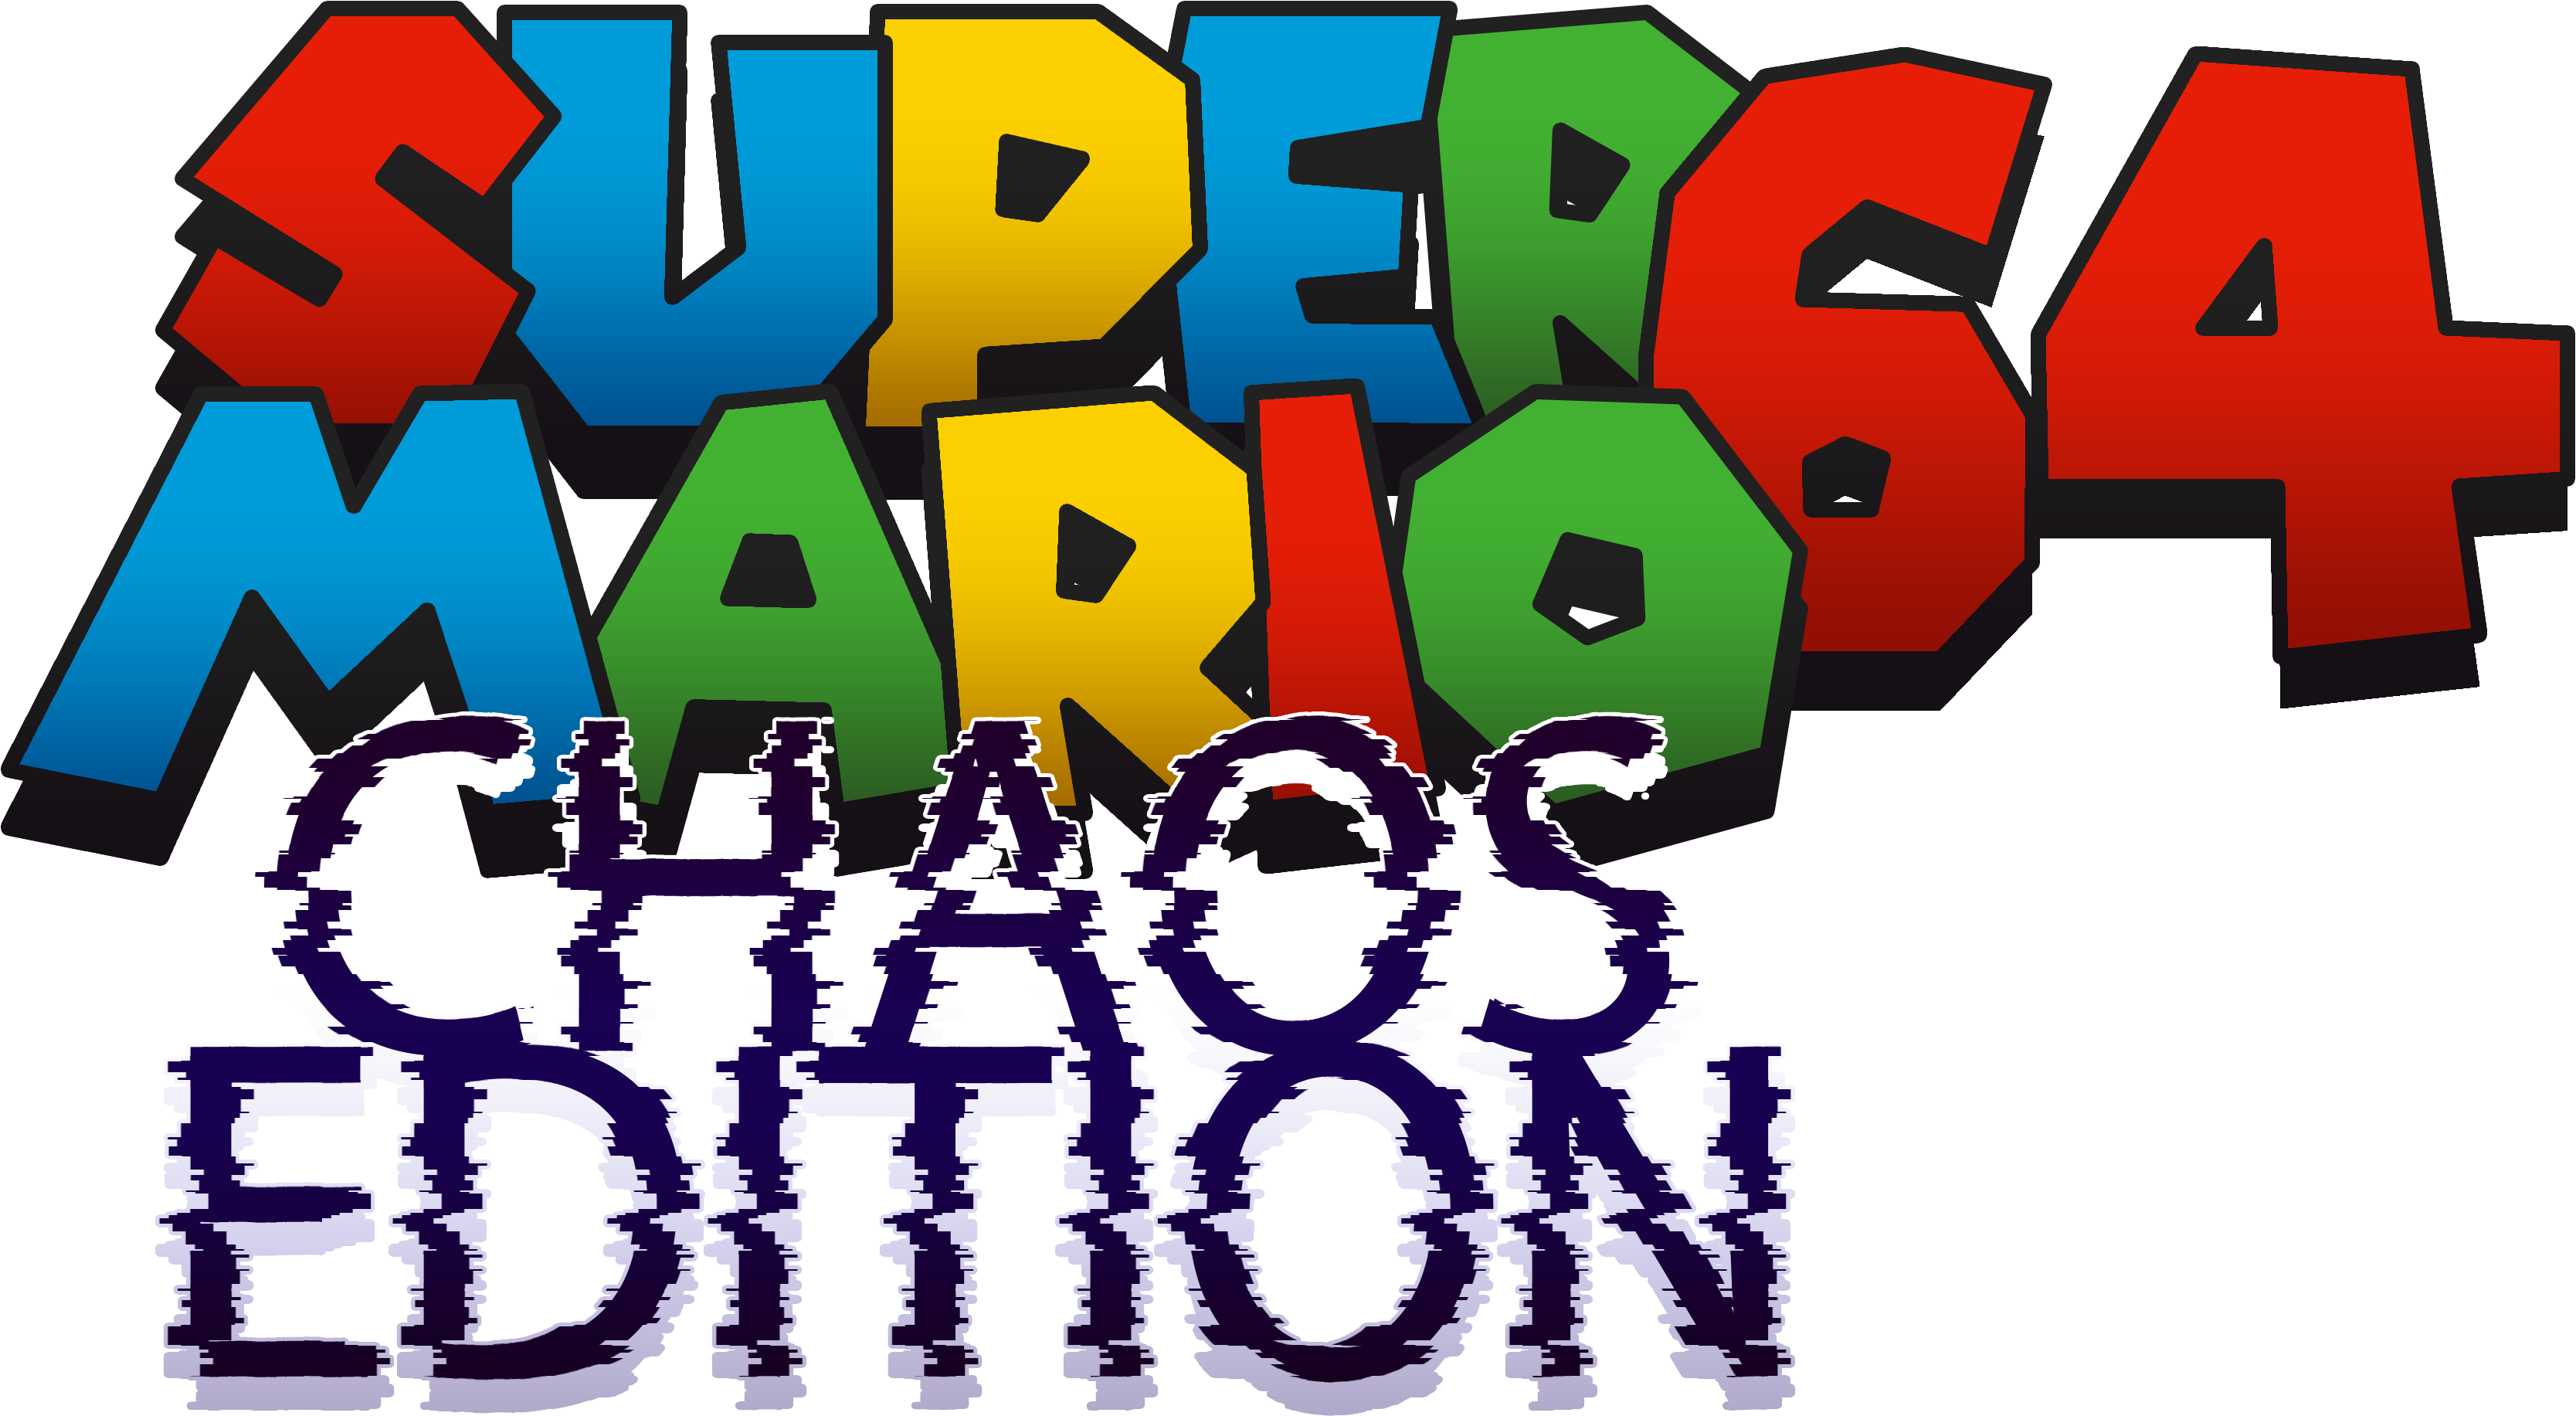 super mario 64 ultimate chaos edition